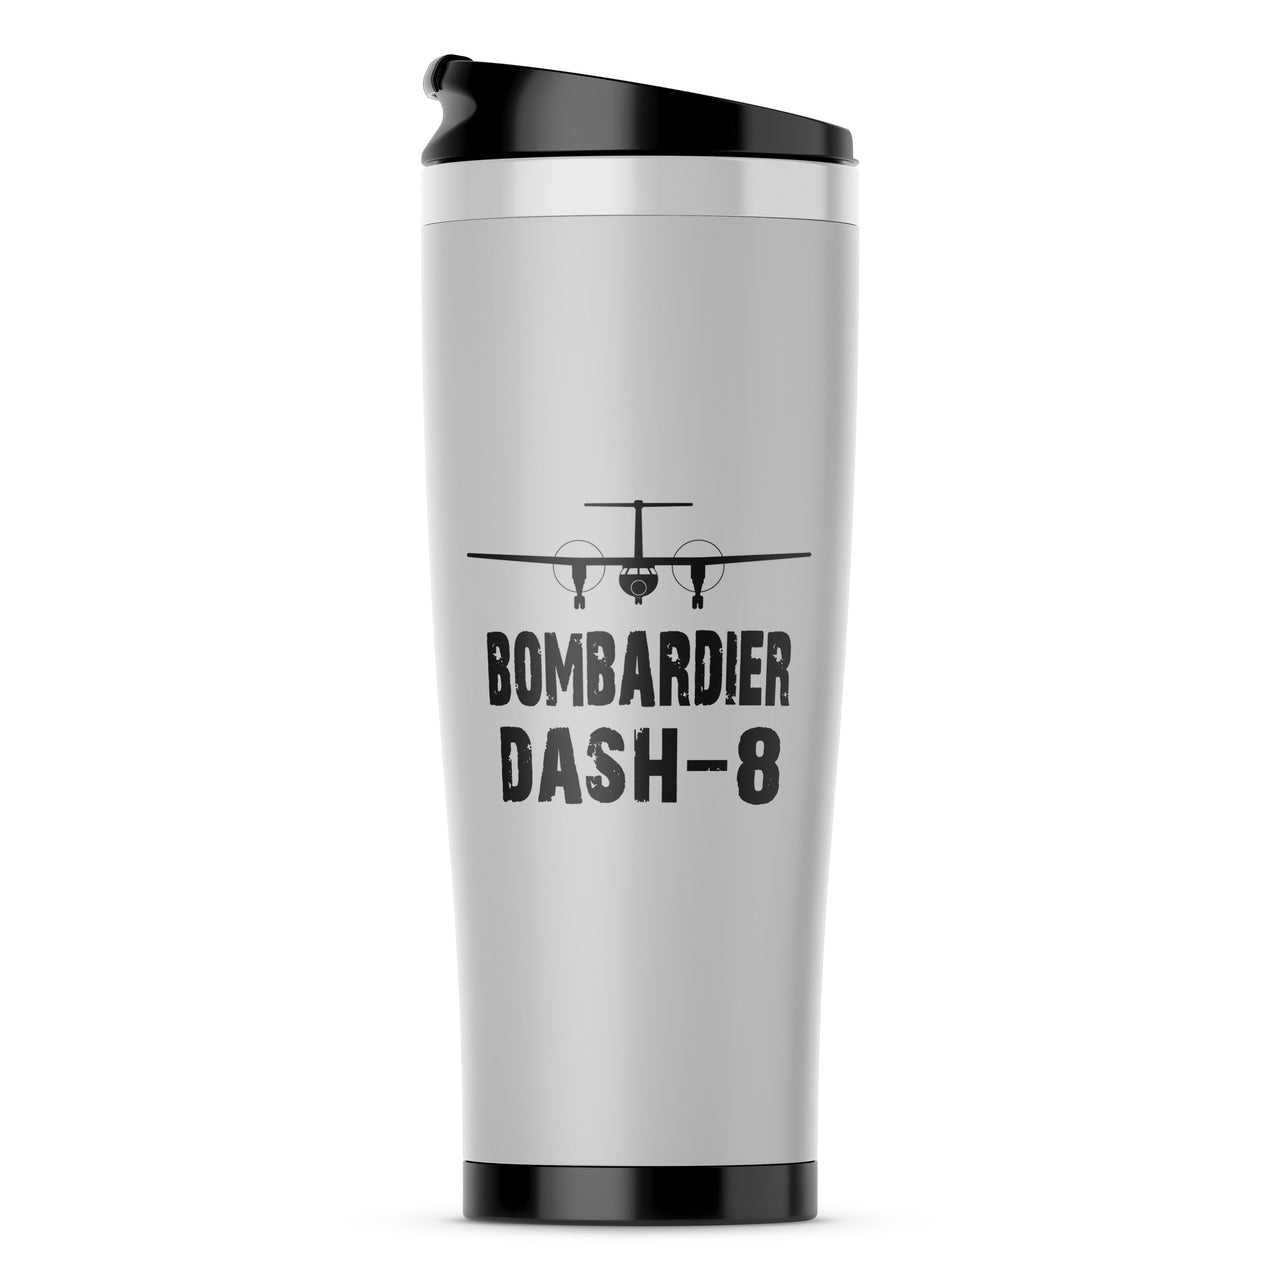 Bombardier Dash-8 & Plane Designed Travel Mugs